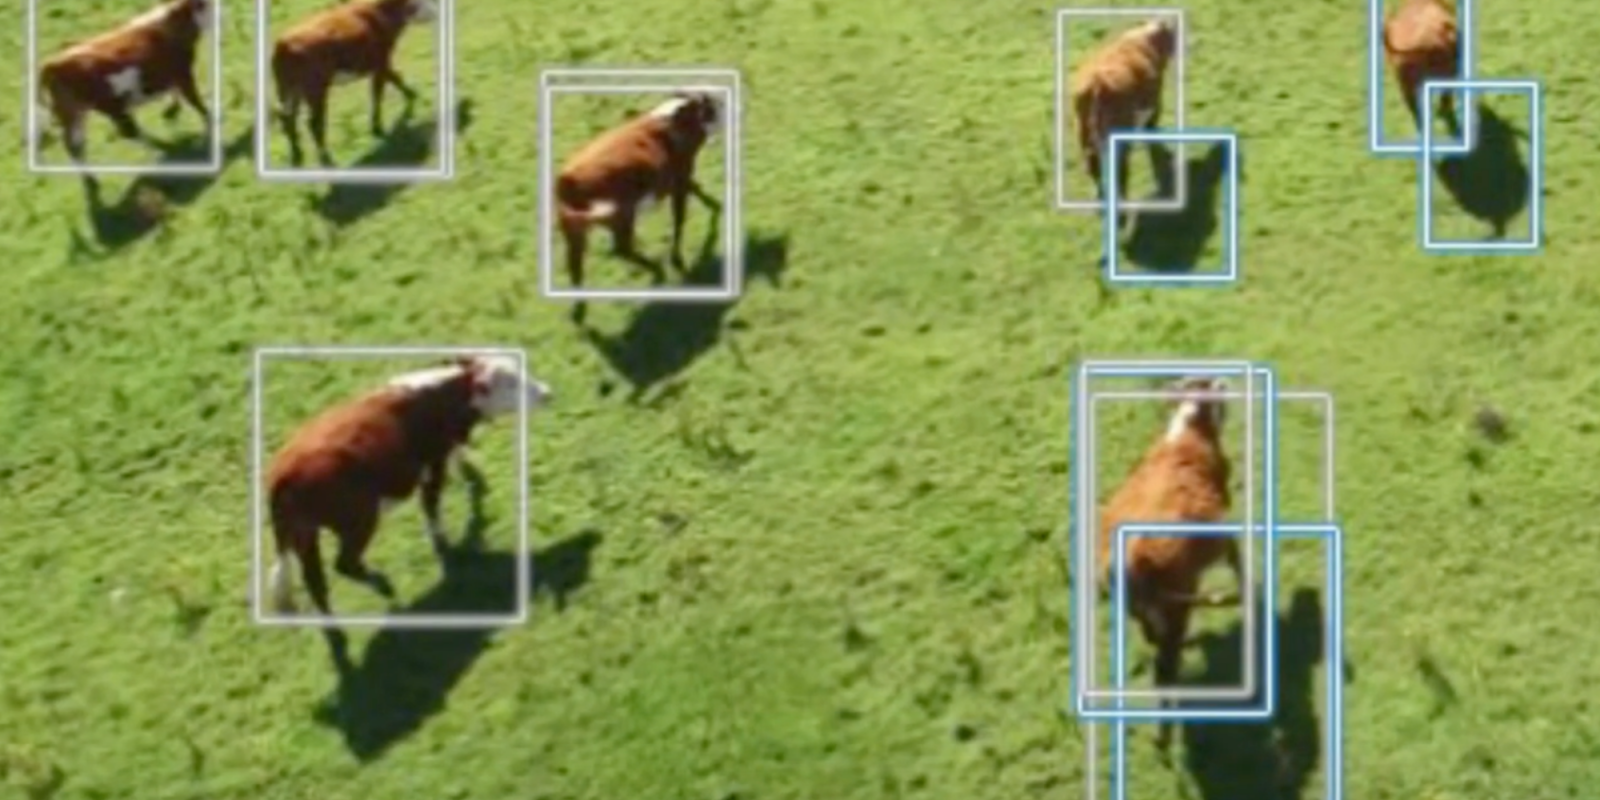 DJI drone for livestock farming